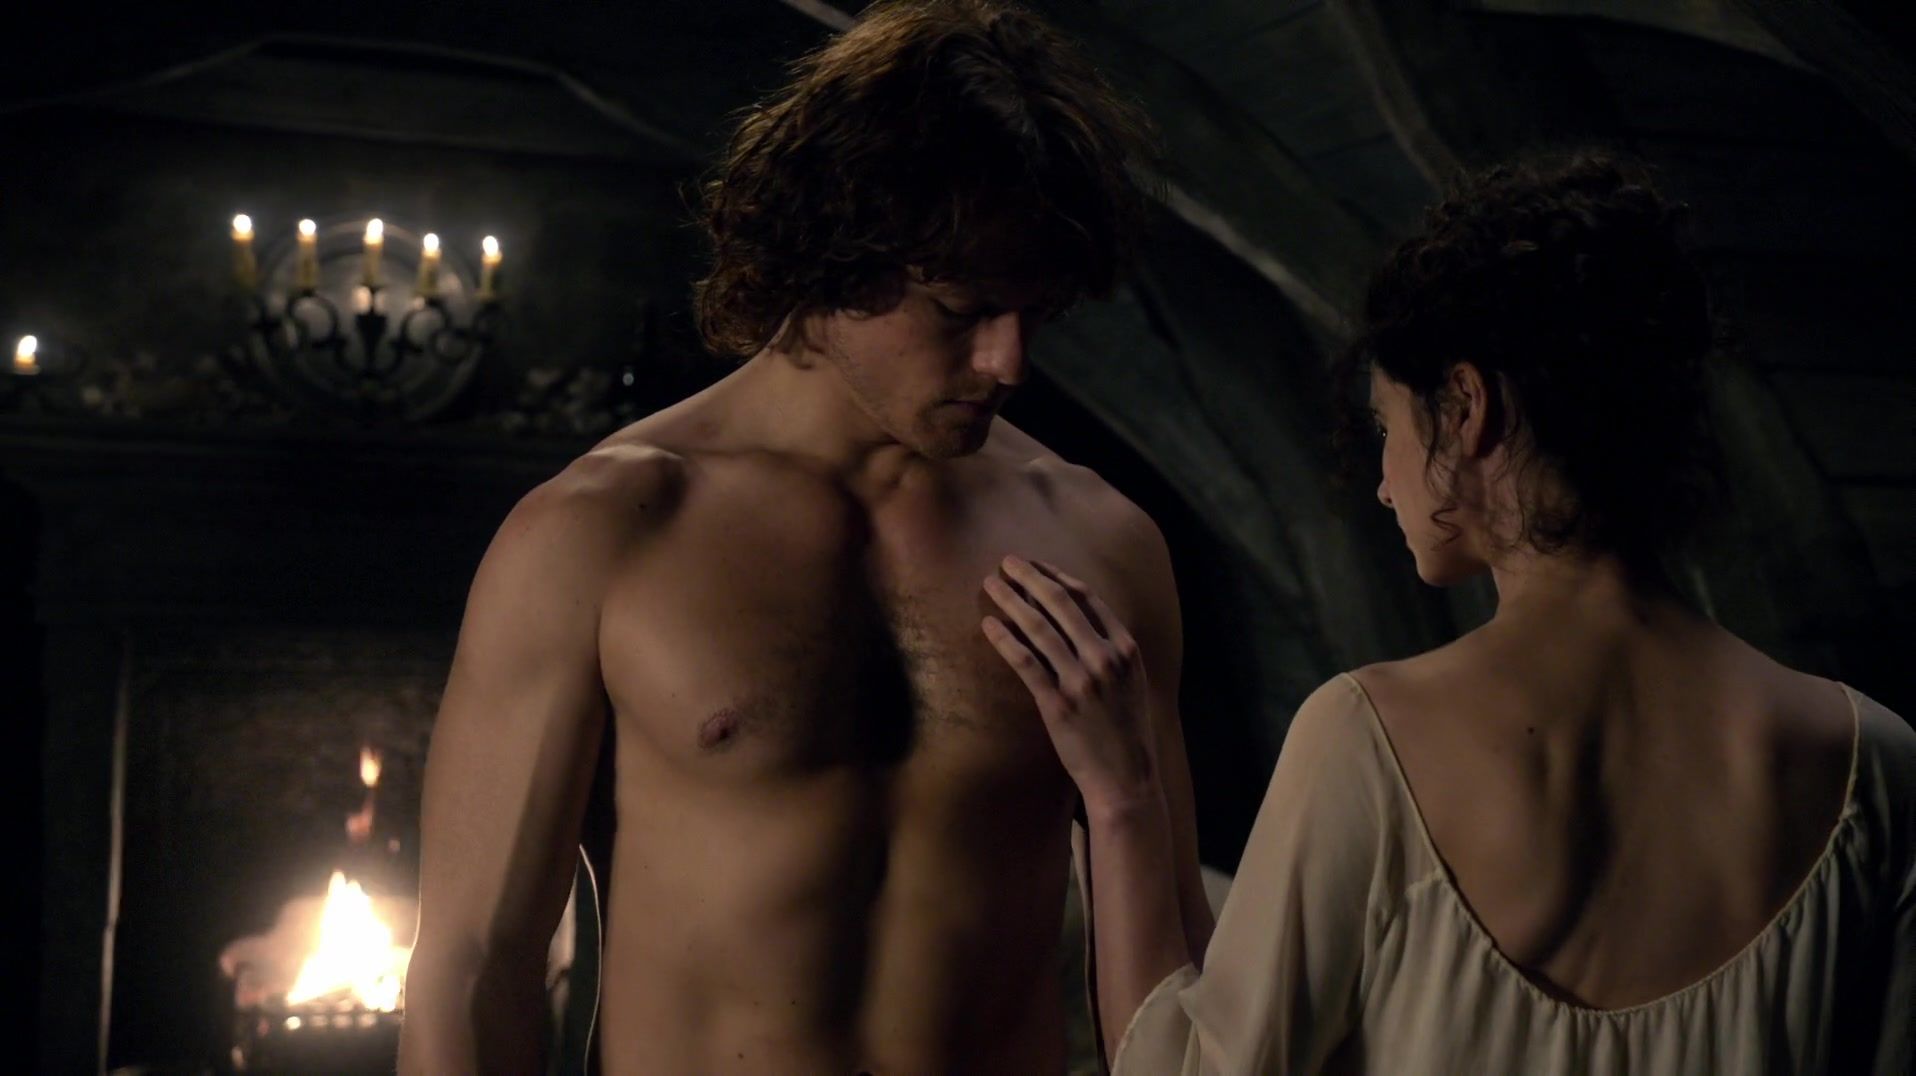 Morena Sex scene of naked Caitriona Balfe | TV show "Outlander" Ass Licking